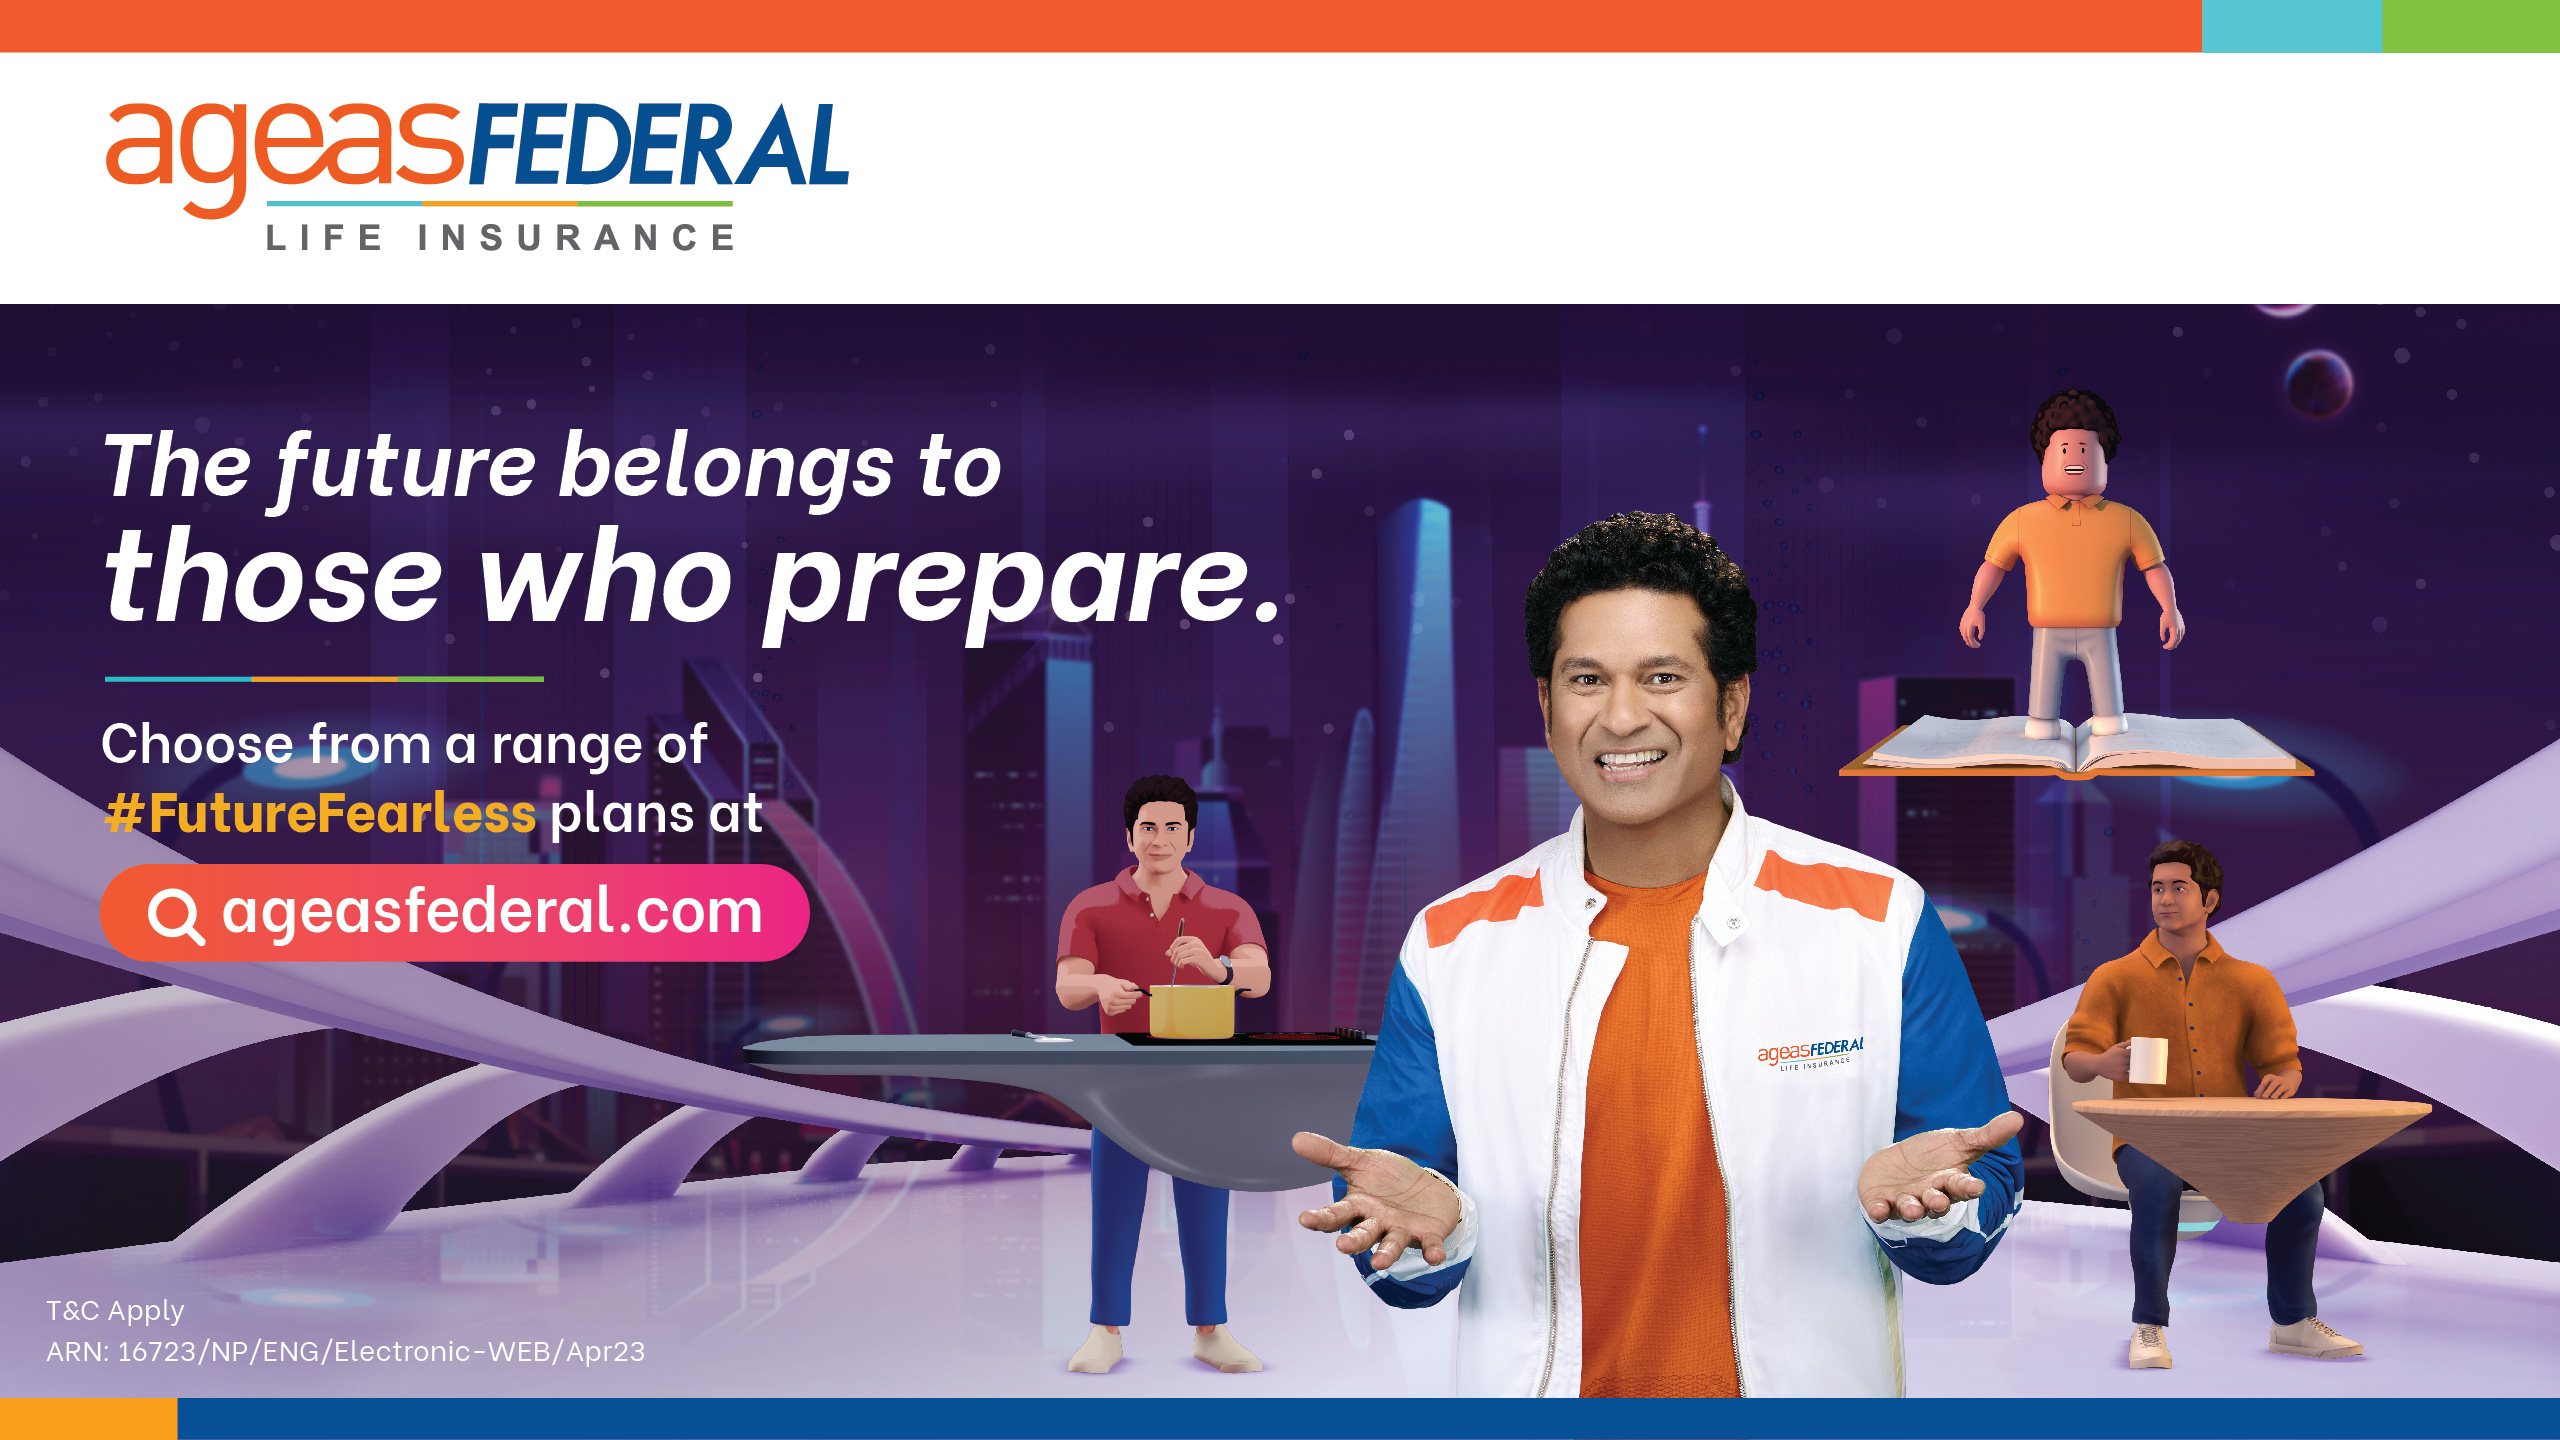 Ageas Federal Life Insurance reimagines the future in its new brand campaign - Sachinverse  Uses Virtual Reality to create custom avatars of brand ambassador, Sachin Tendulkar in the metaverse